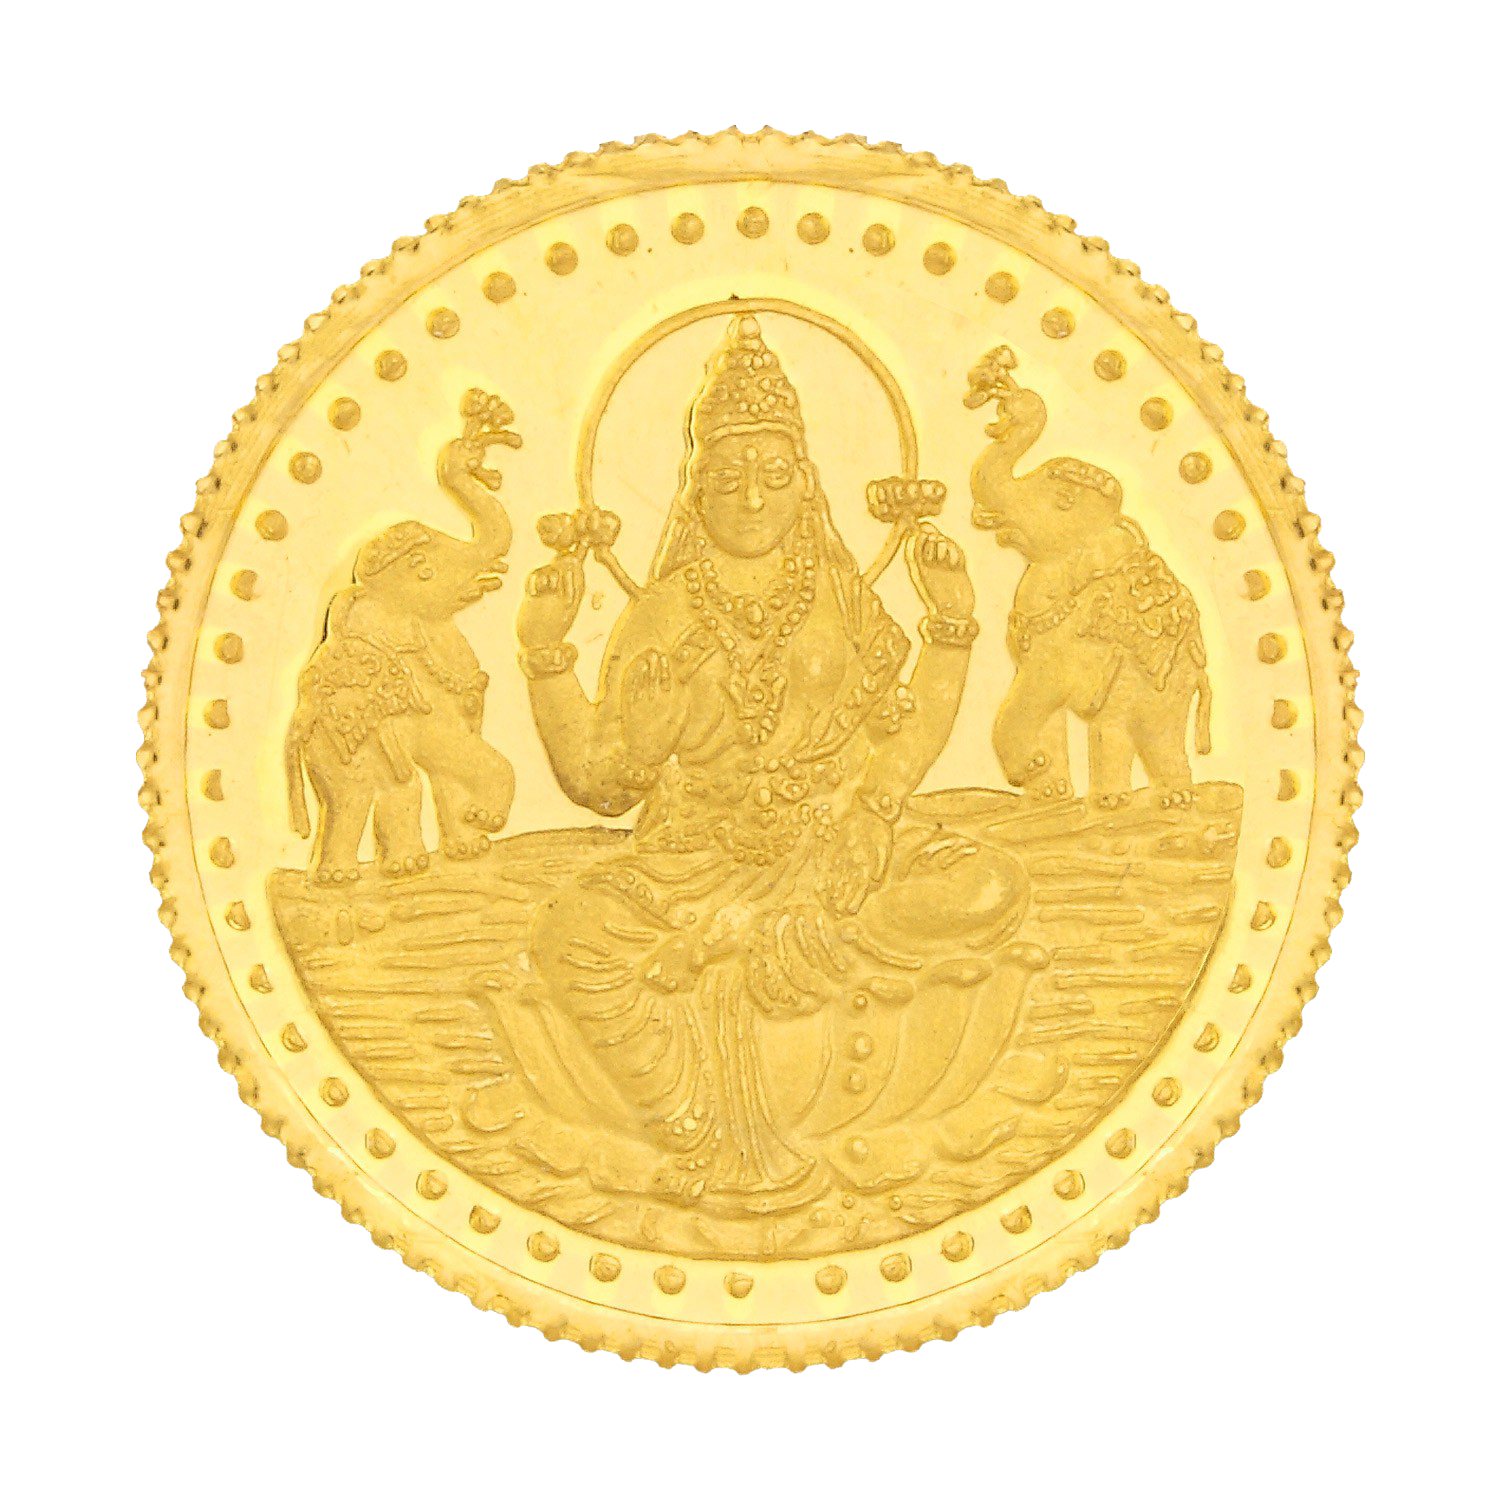 Lakshmi Gold Coin Image PNG Image